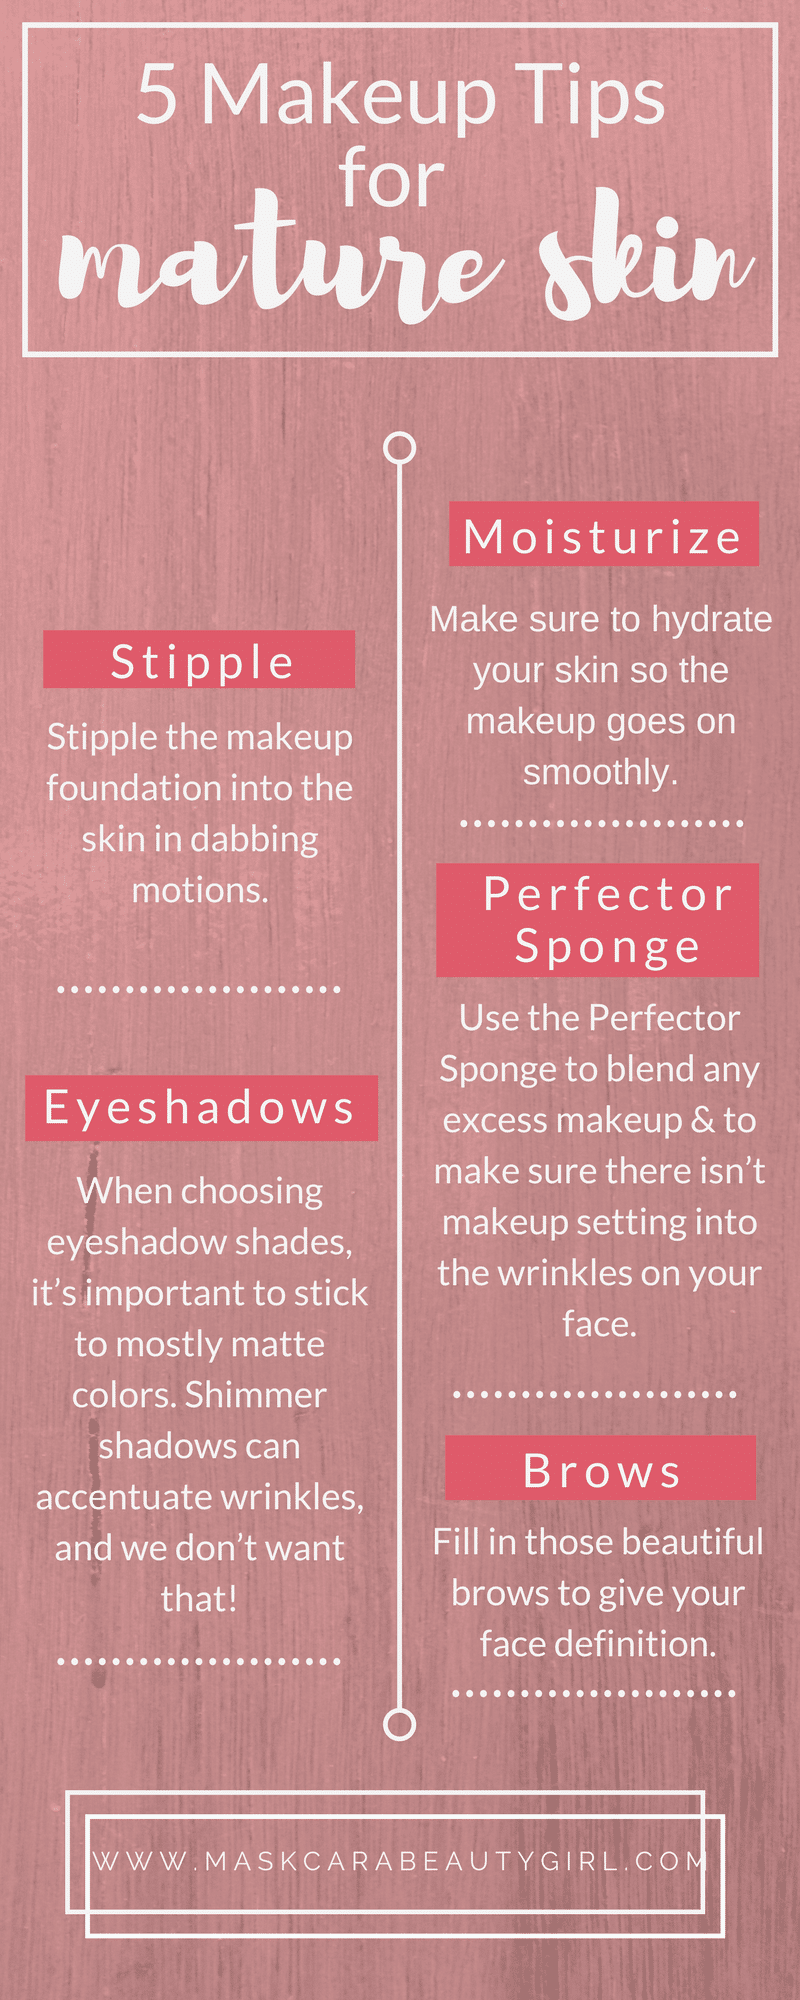 Makeup tips for Mature Skin with Maskcara Beauty Girl at www.maskcarabeautygirl.com